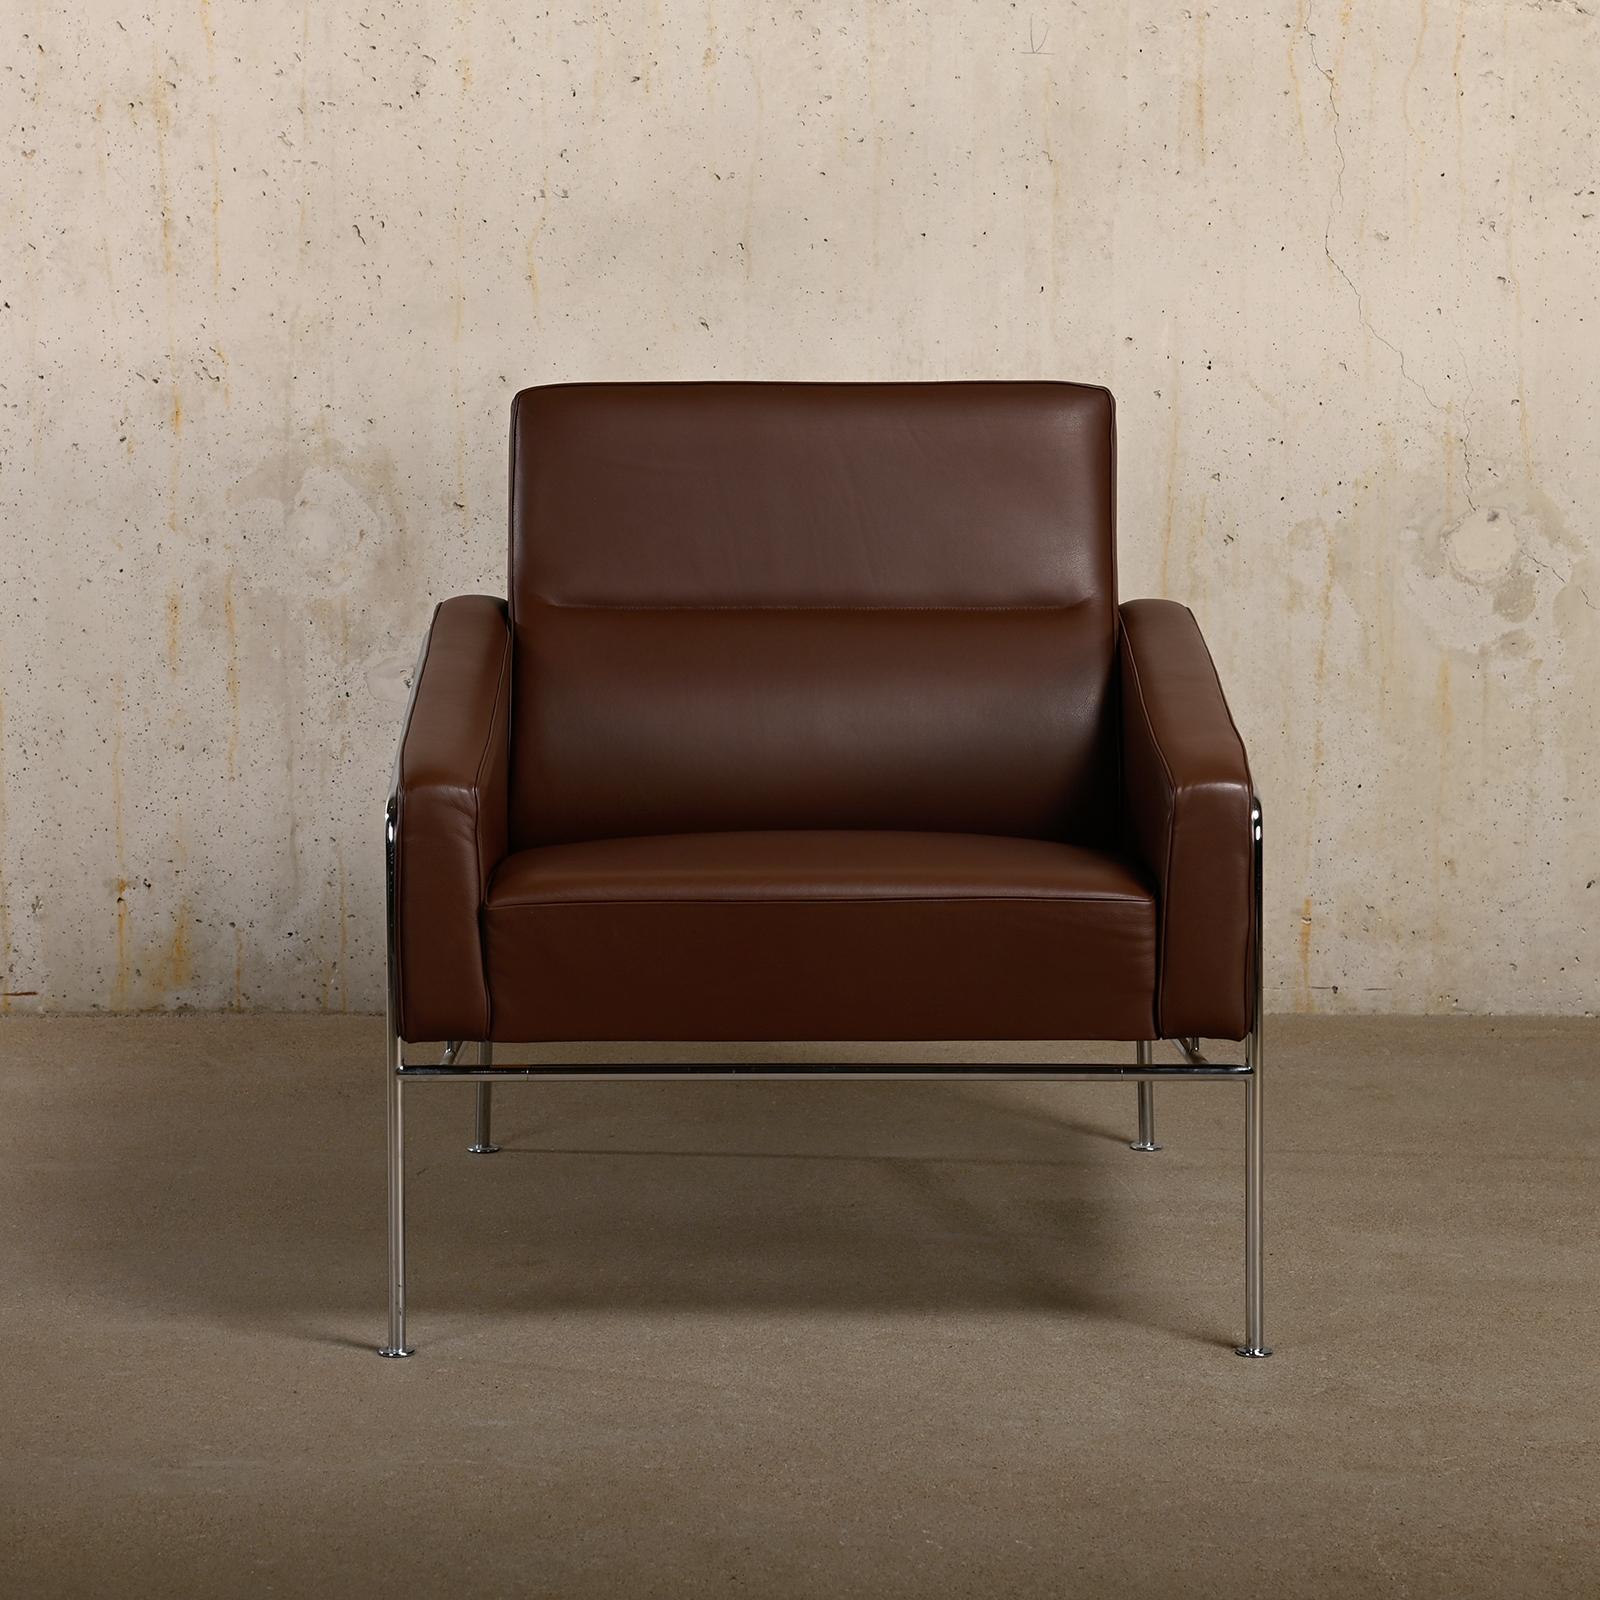 Arne Jacobsen Pair Armchairs 3300 Series in Chestnut leather for Fritz Hansen For Sale 1